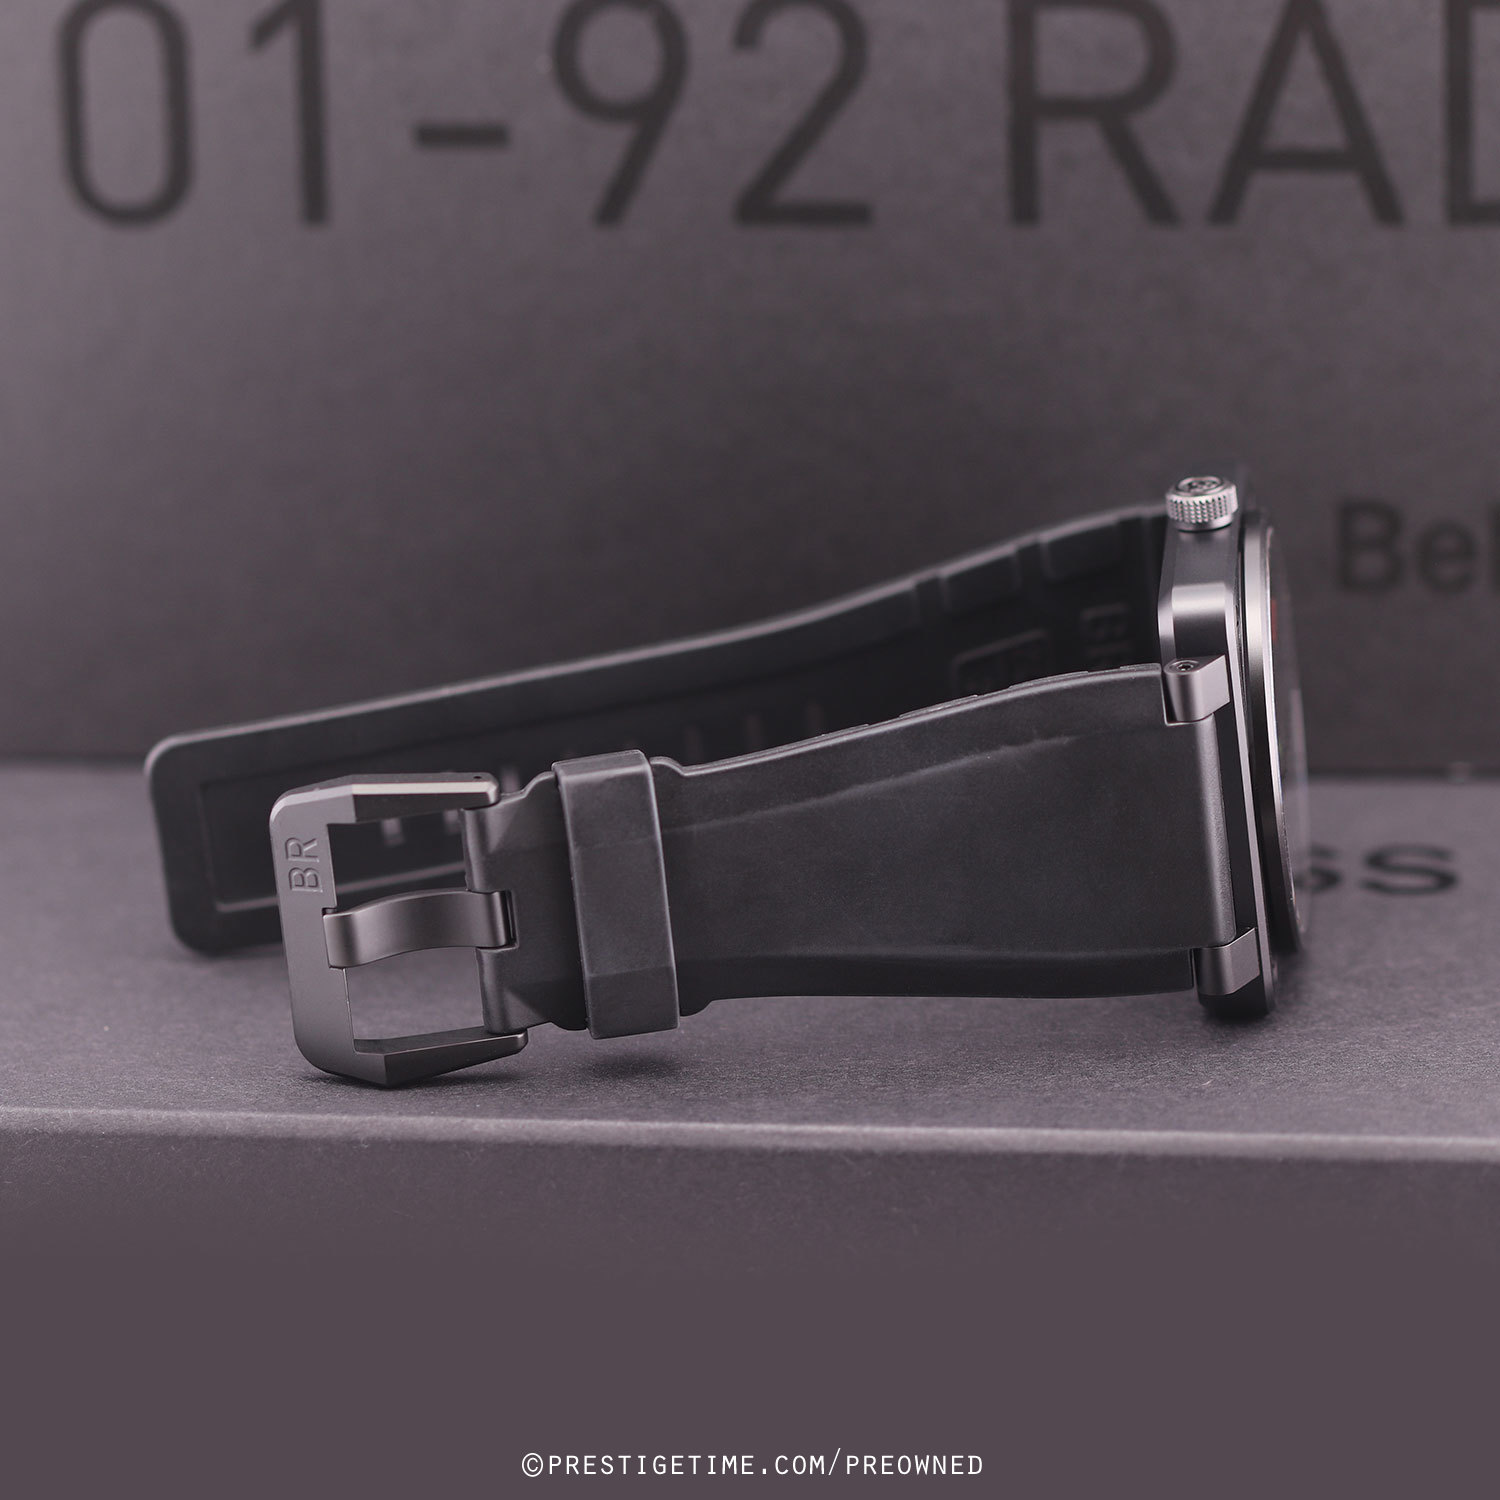 Bell & Ross BR01 Casino Roulette Radar Watch - King Jewelers